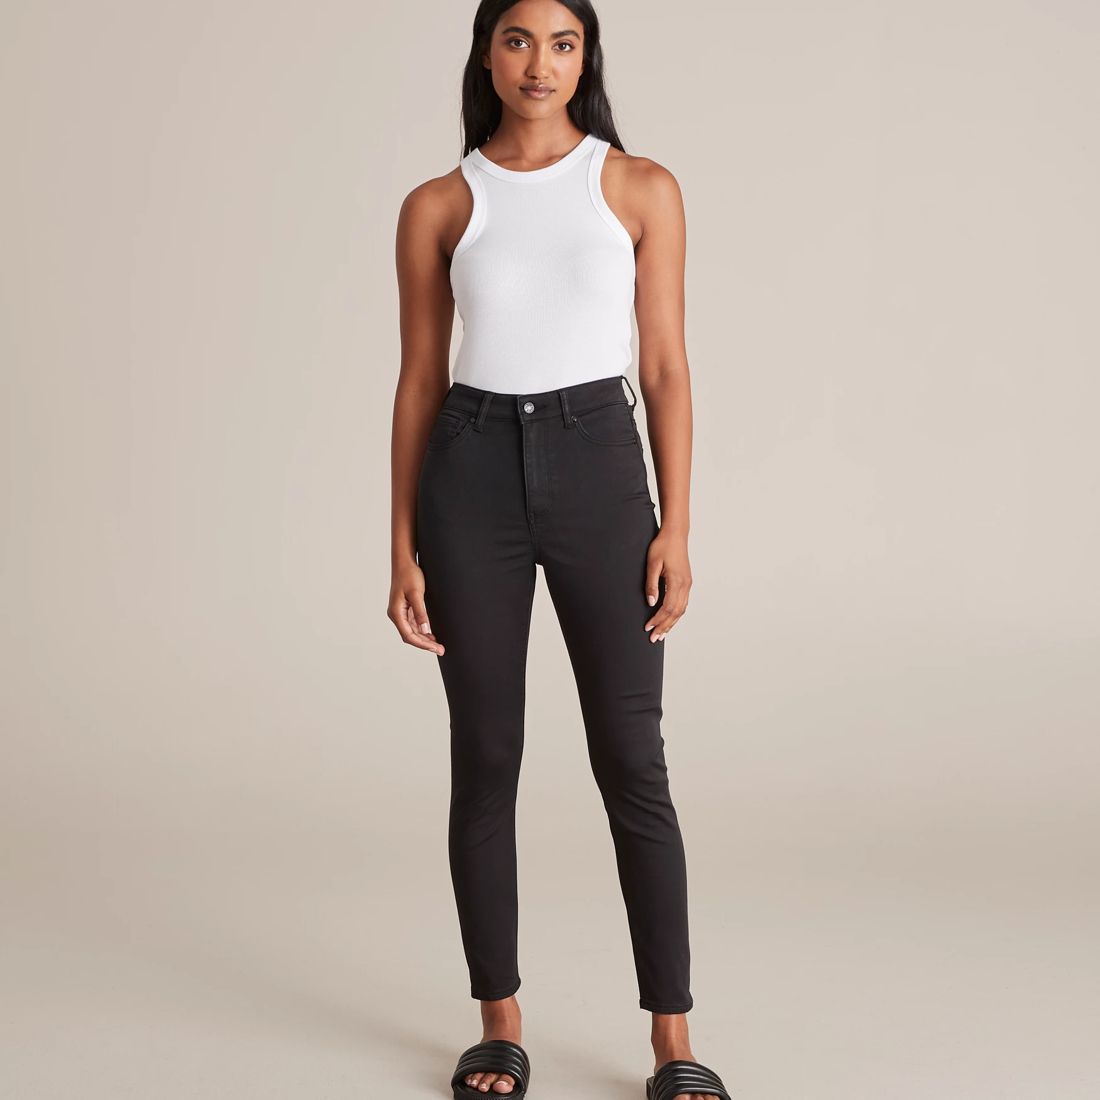 Sophie Wonder Denim Skinny High Rise Ankle Length Jeans | Target Australia